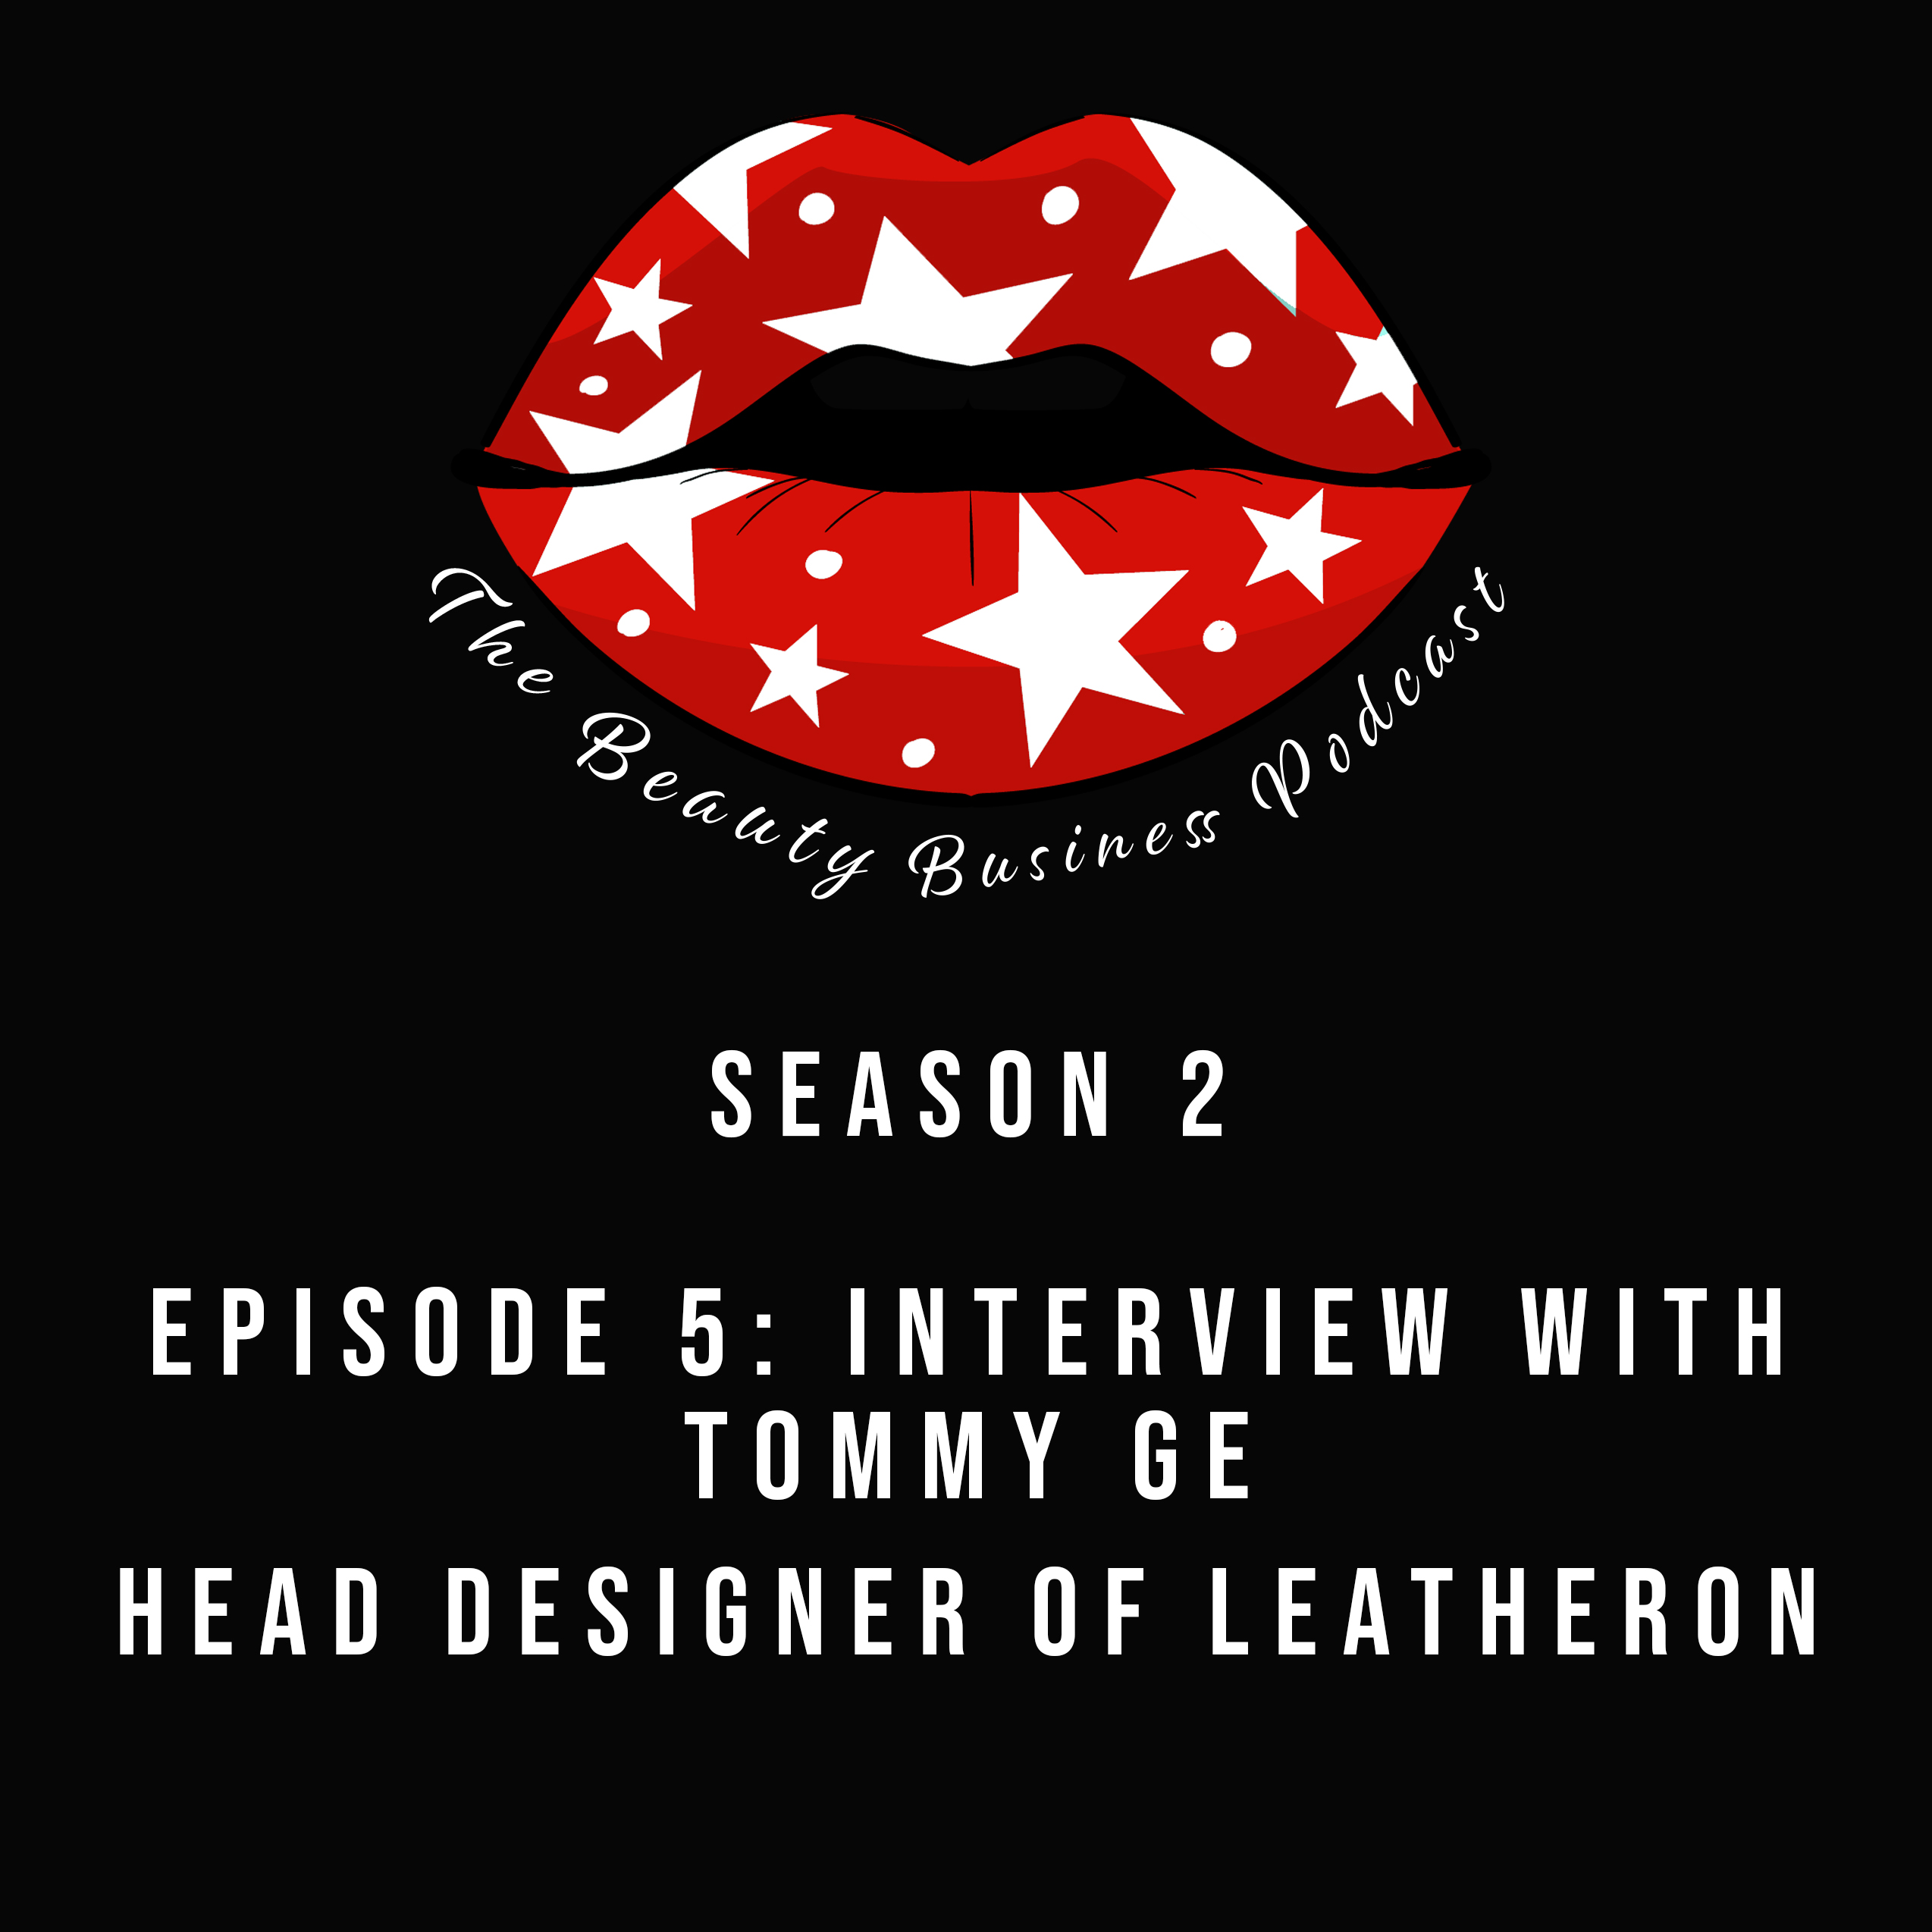 Season 2: Episode 5 - Leatheron designer Tommy Ge